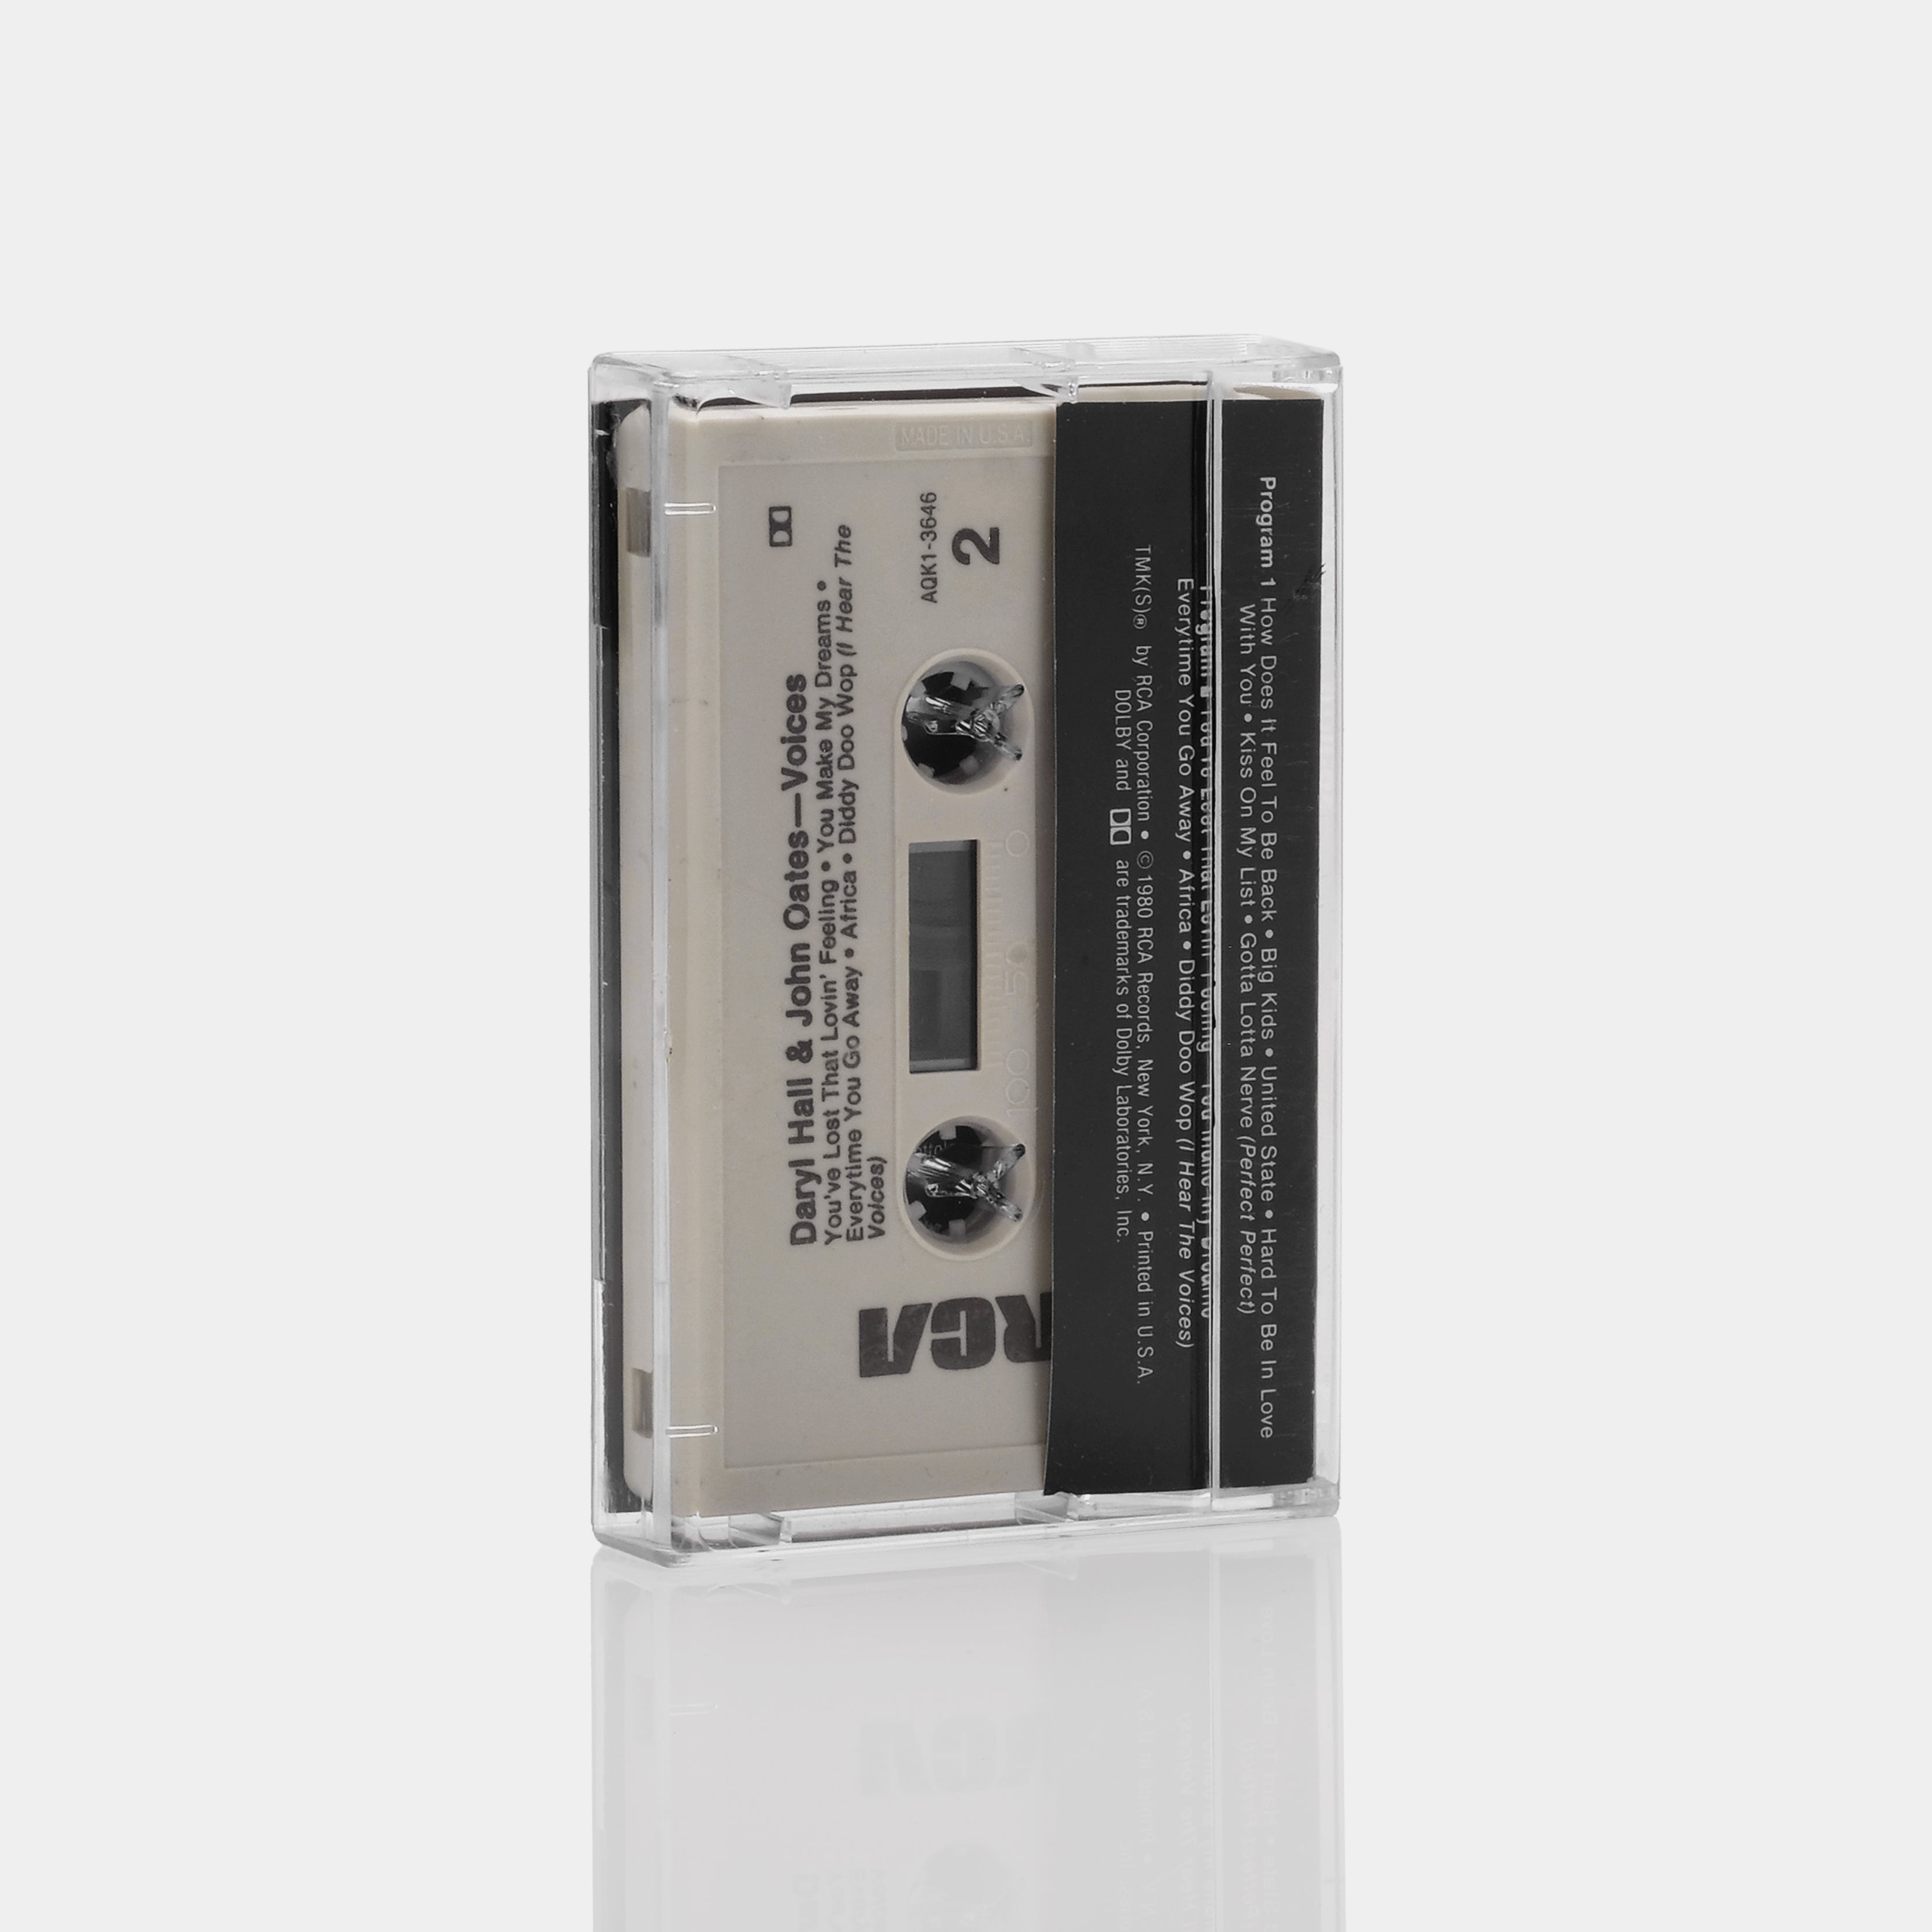 Daryl Hall & John Oates - Voices Cassette Tape